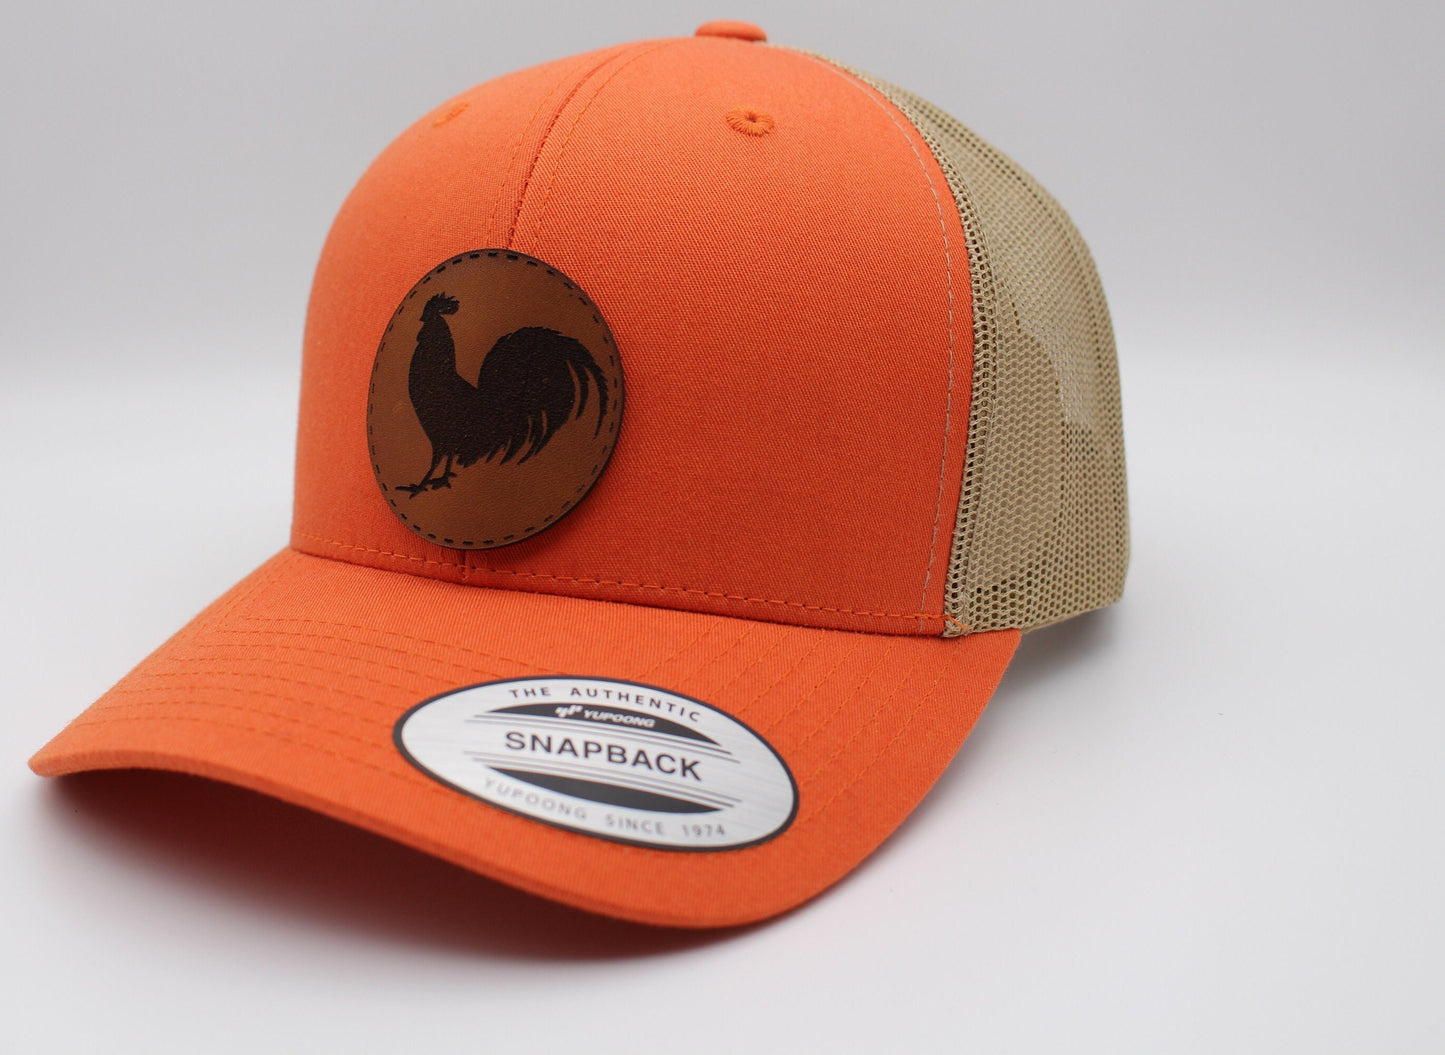 Rooster Trucker Snapback Hat